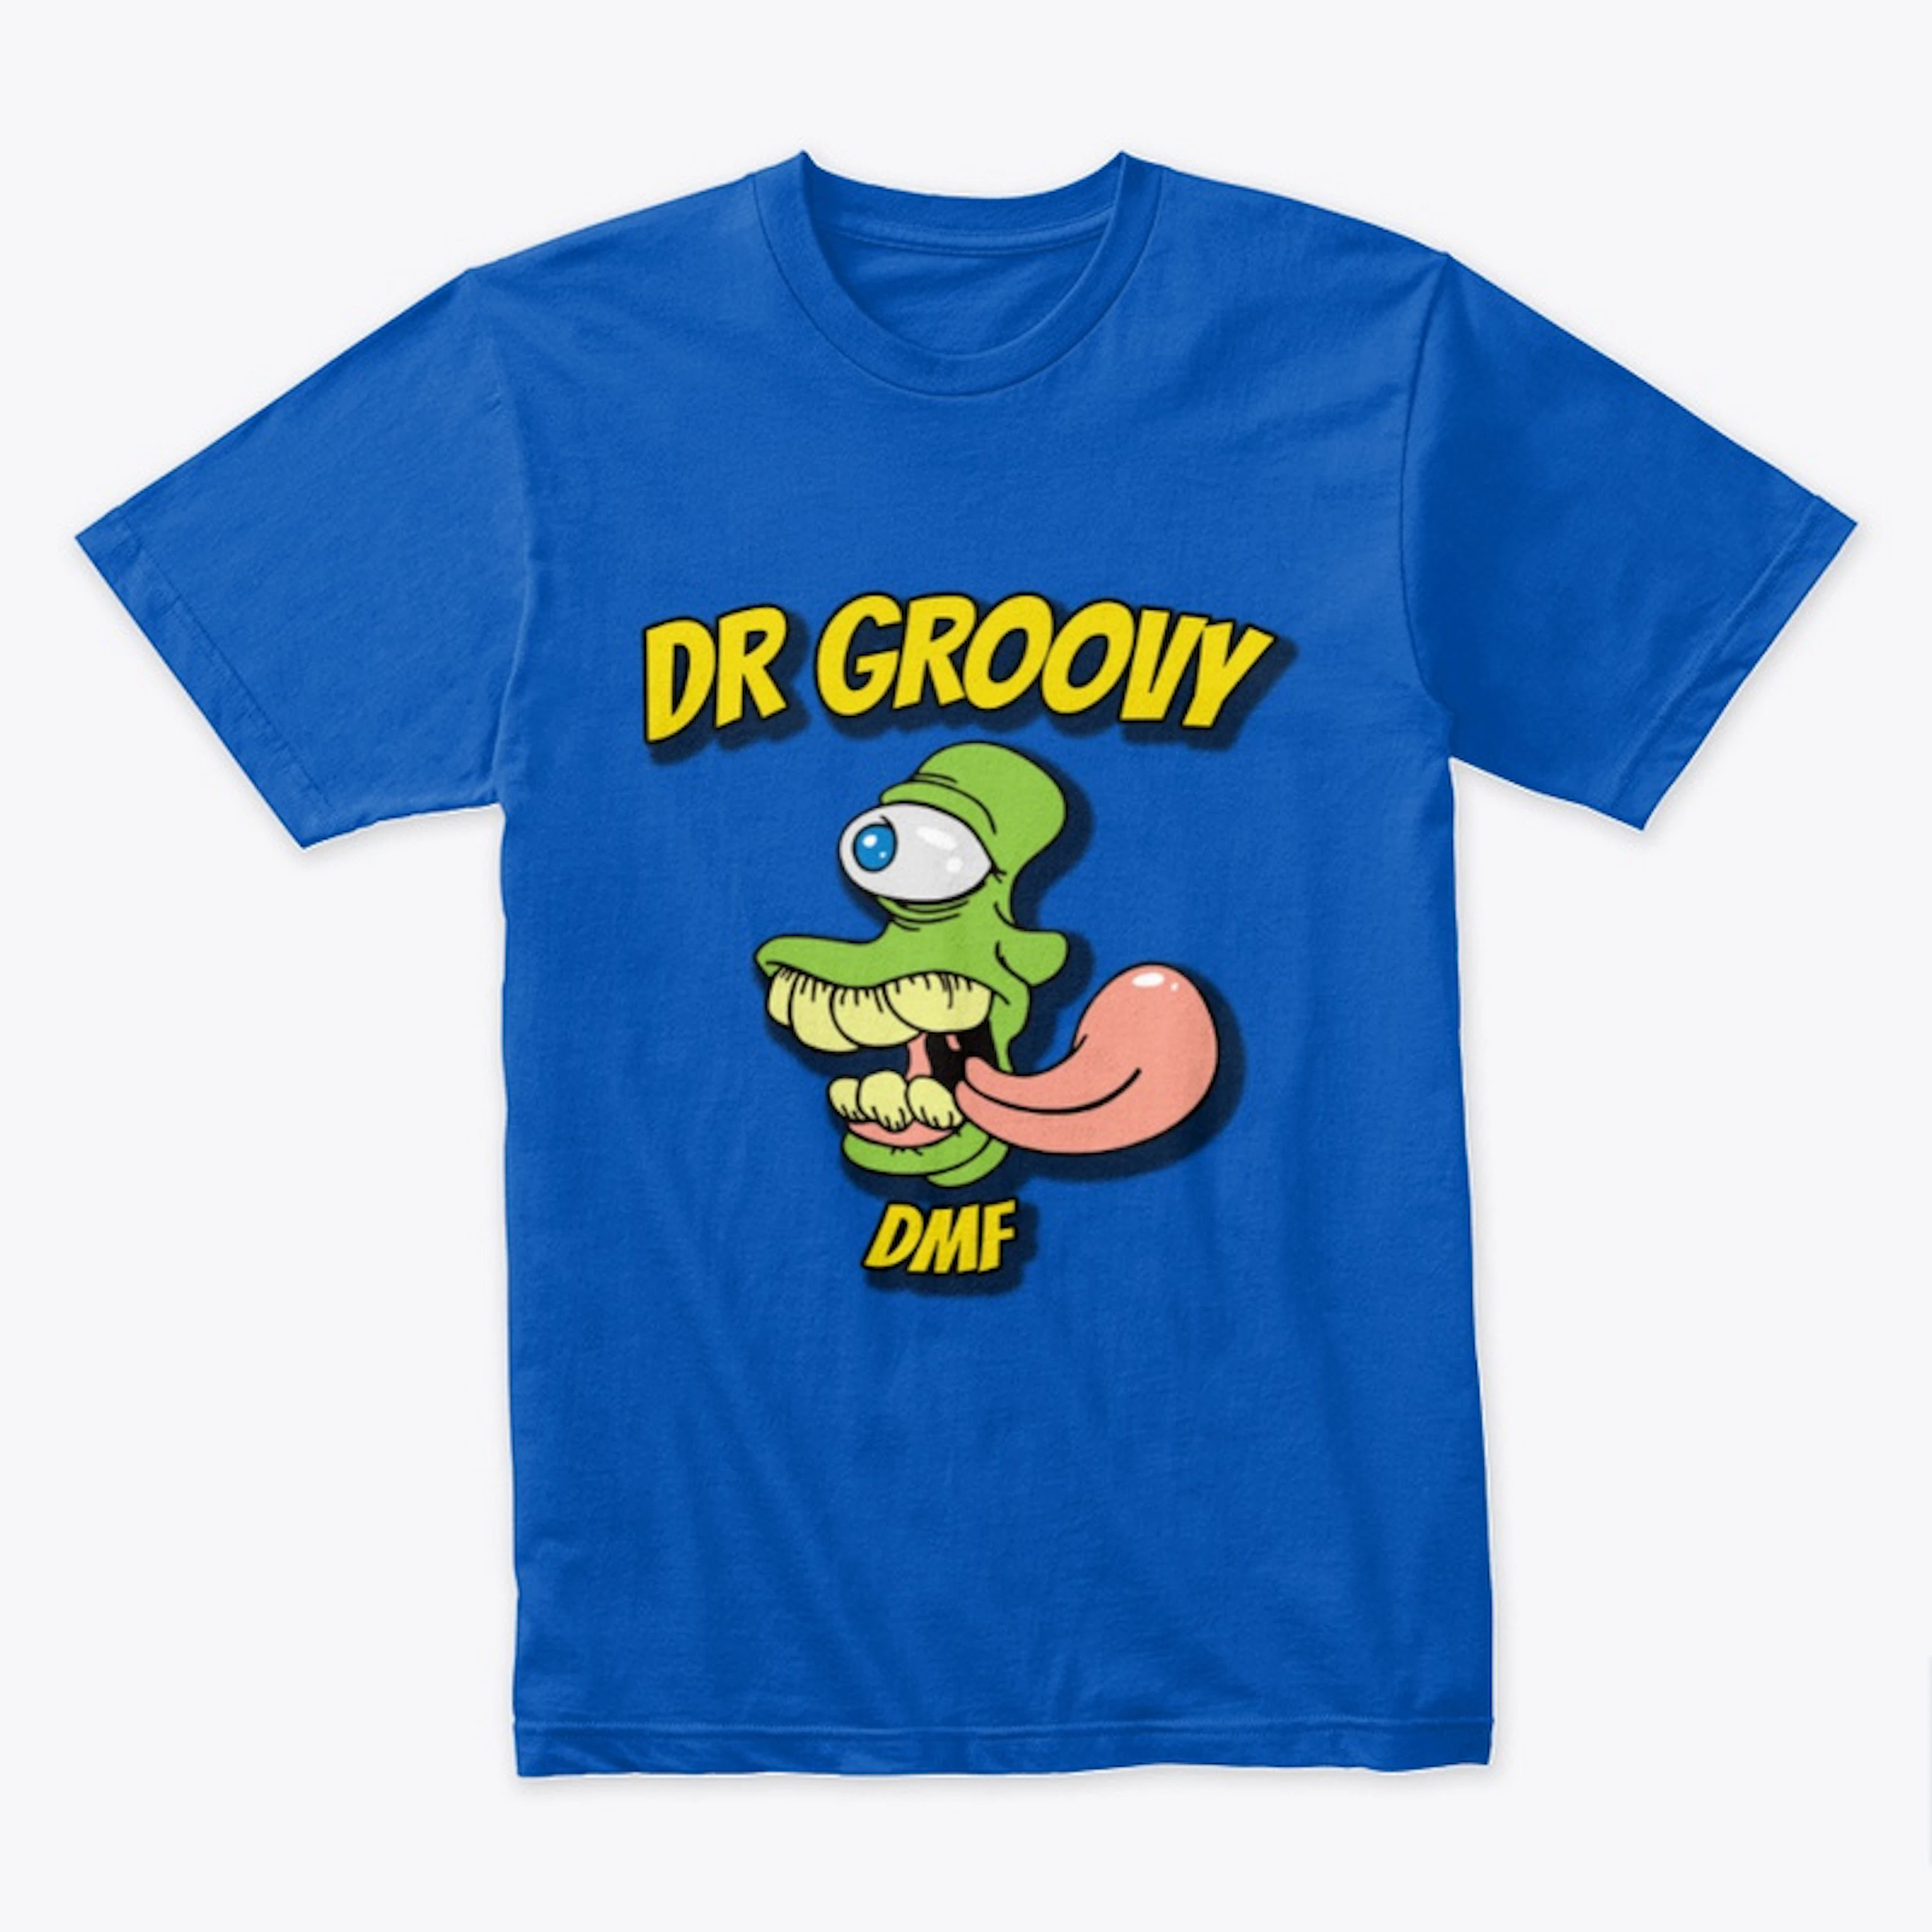 DR GROOVY DMF